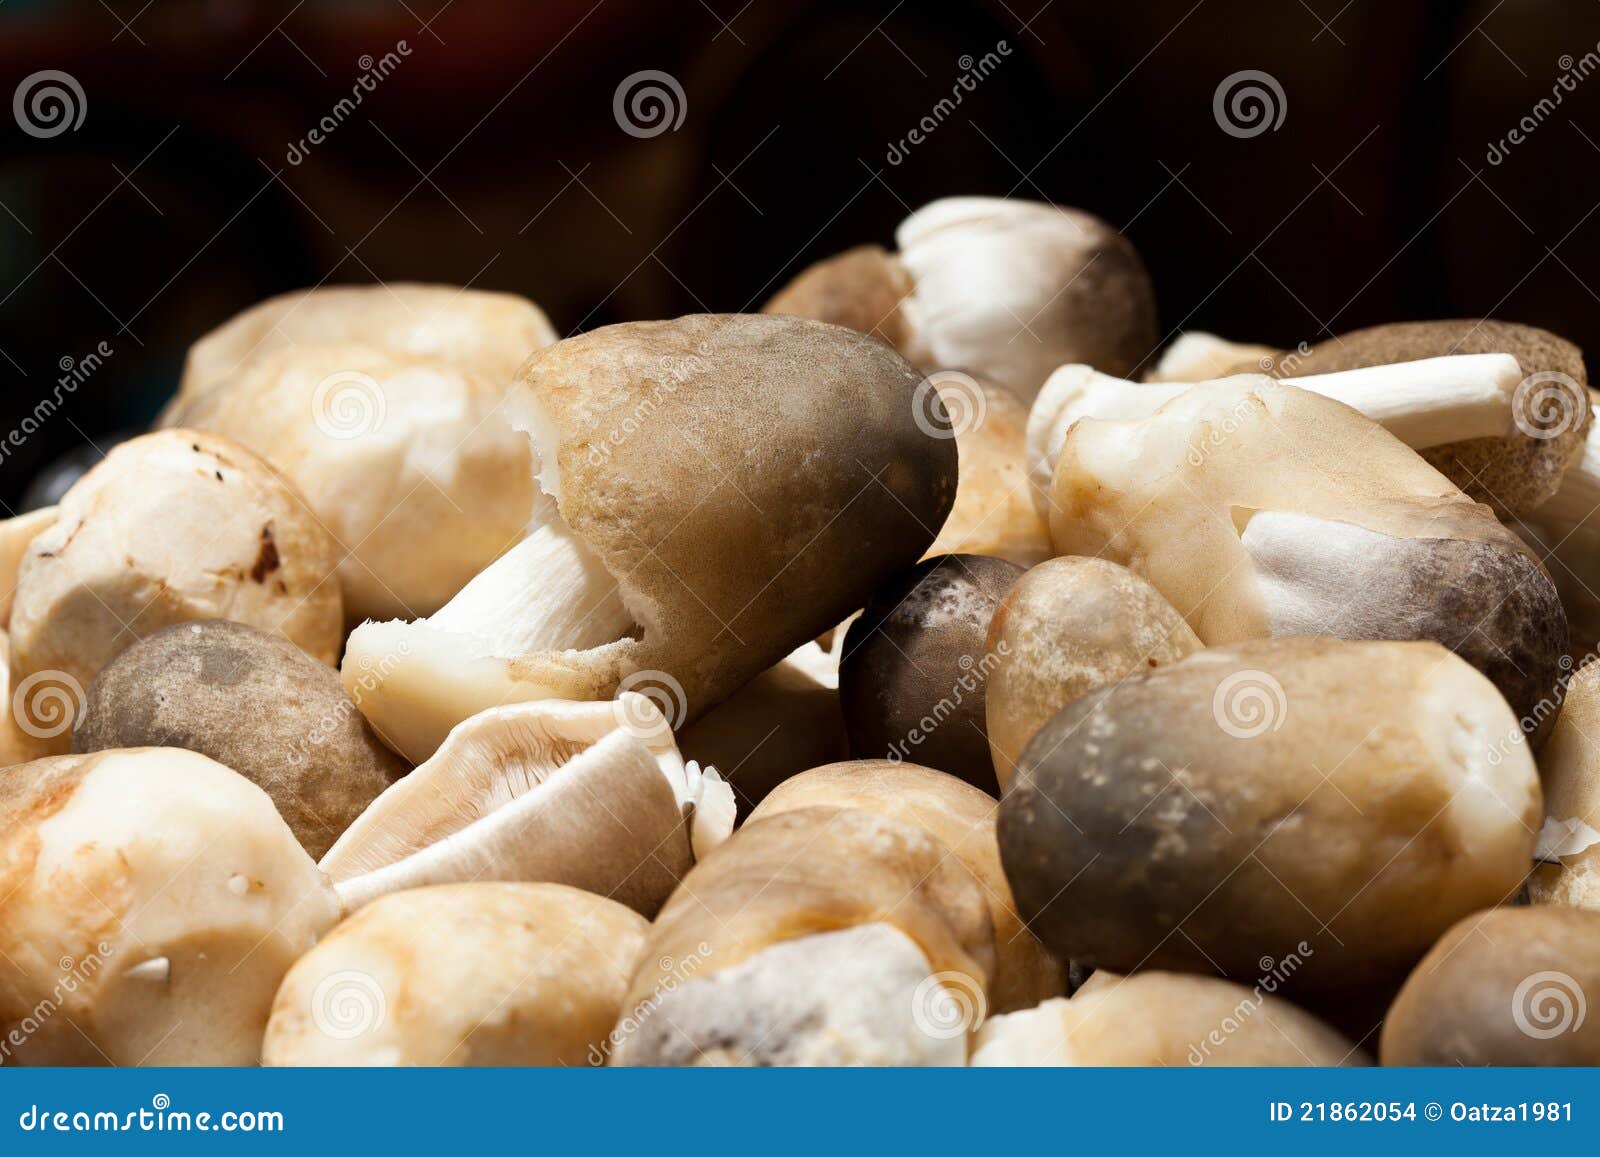 1,752 Straw Mushrooms Stock Photos - Free & Royalty-Free Stock